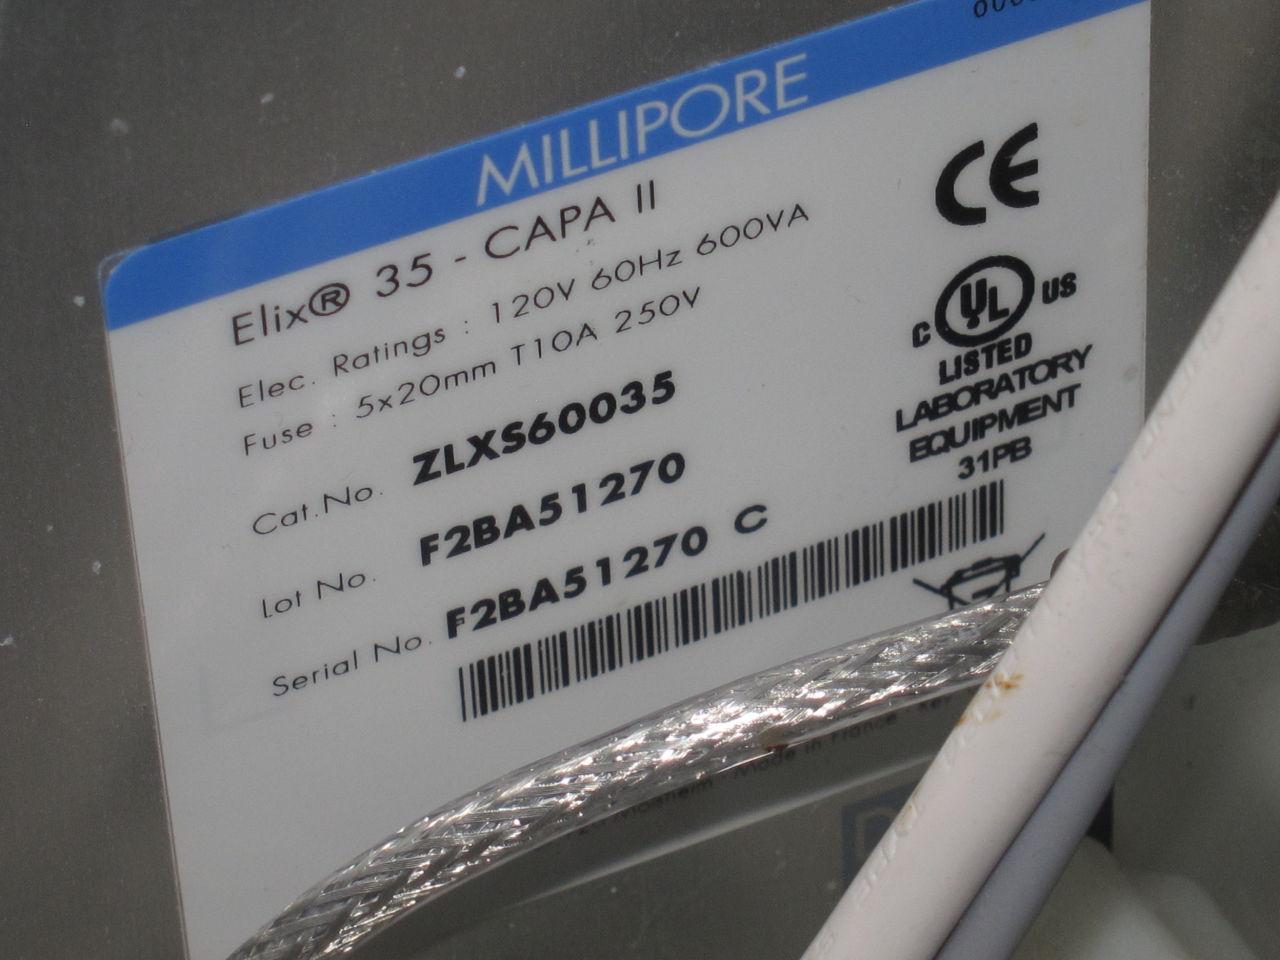 MILLIPORE Elix-CAPS II w/ full cart configuration